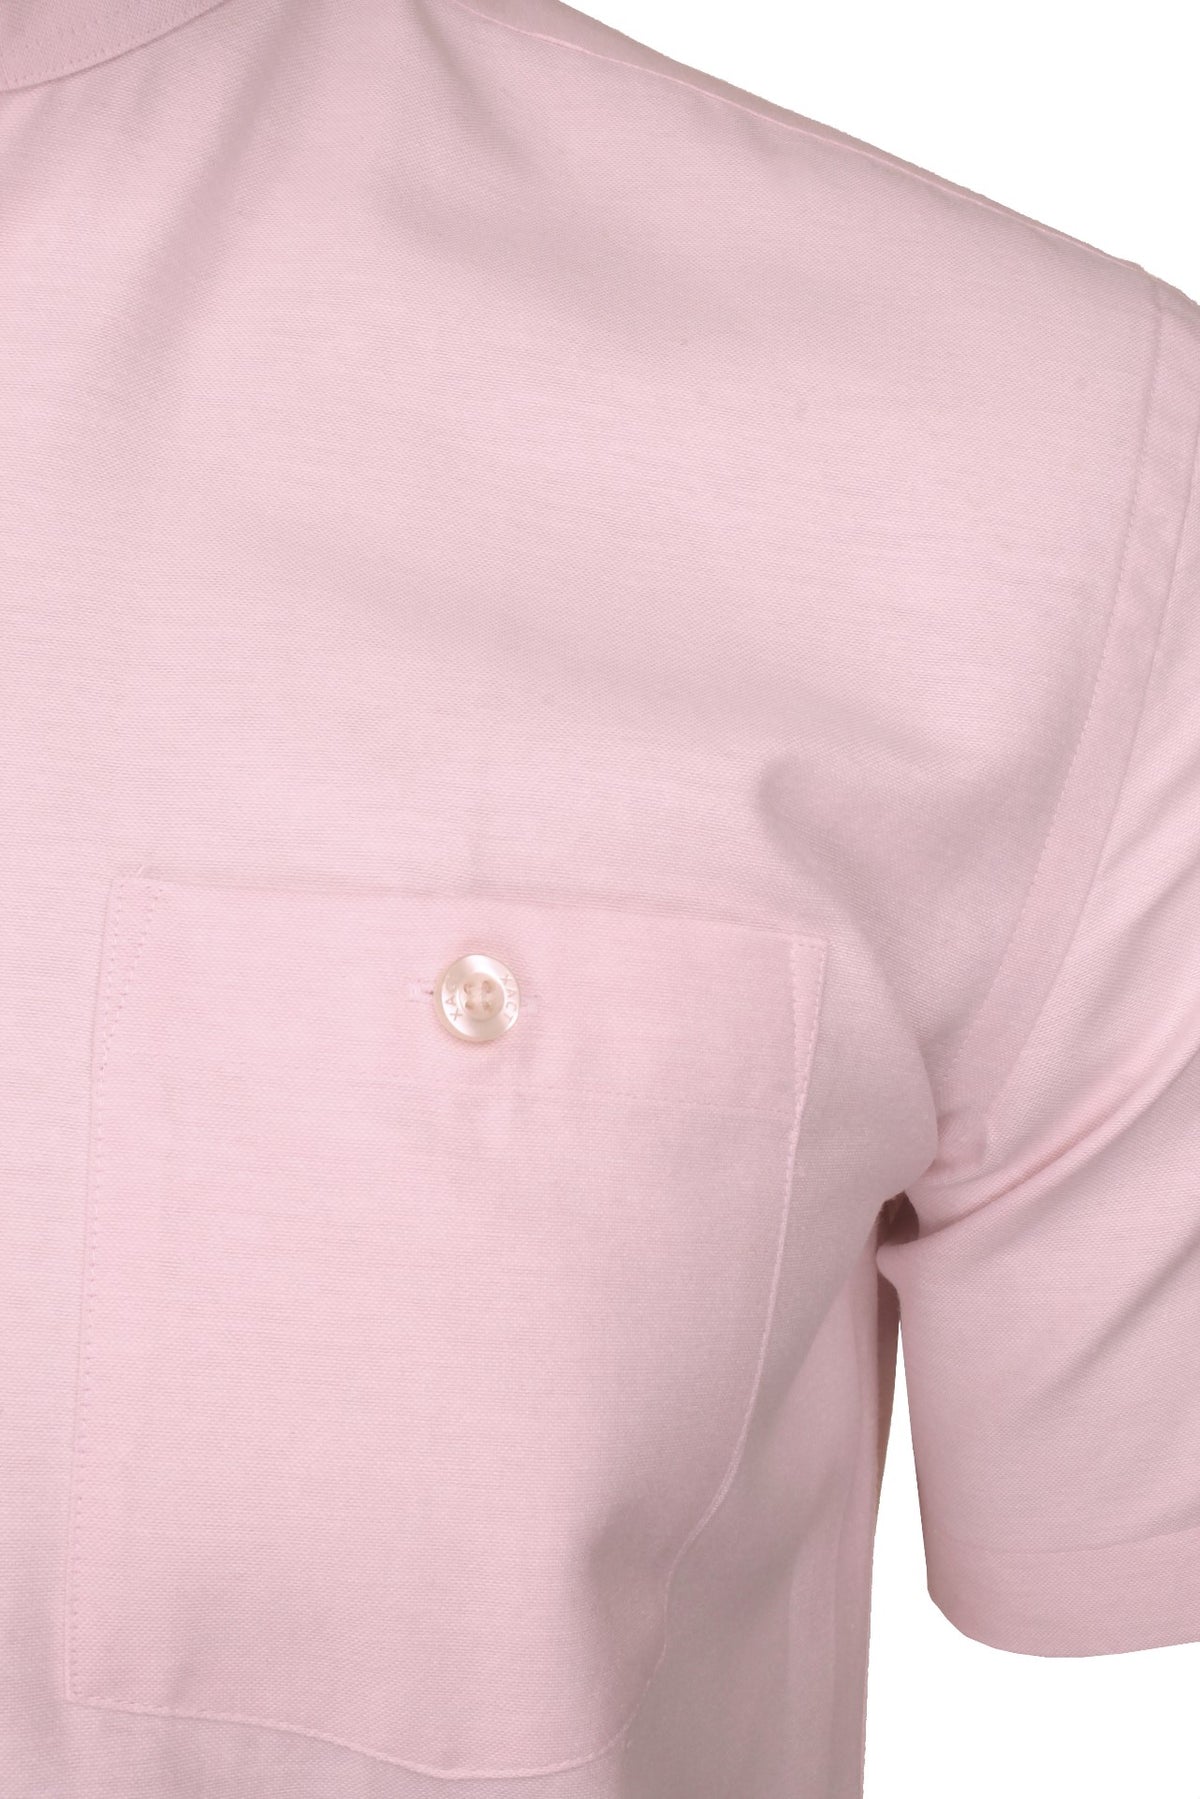 Xact Men's Grandad Collar Oxford Shirt Slim Fit Short Sleeved, 02, Xsh1022, Soft Pink